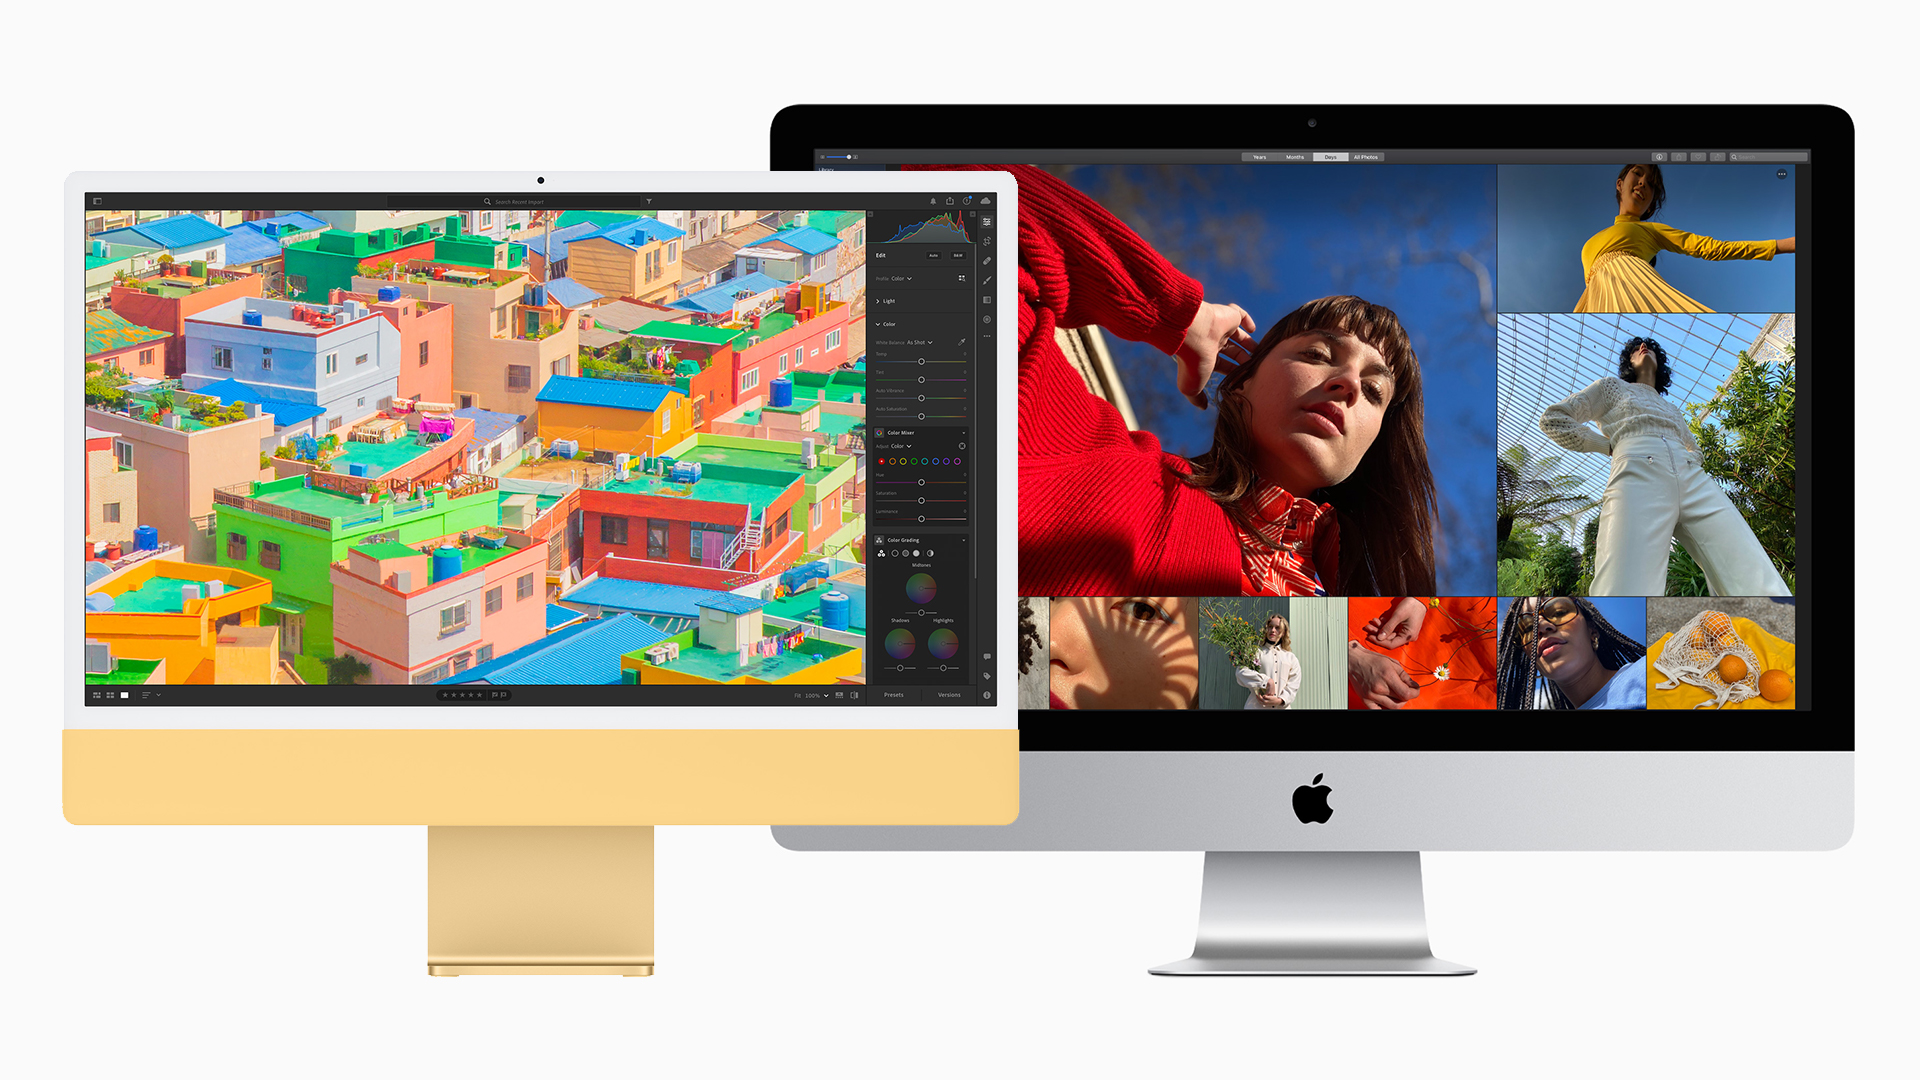 Apple iMac 27 (2019) Dimensions & Drawings